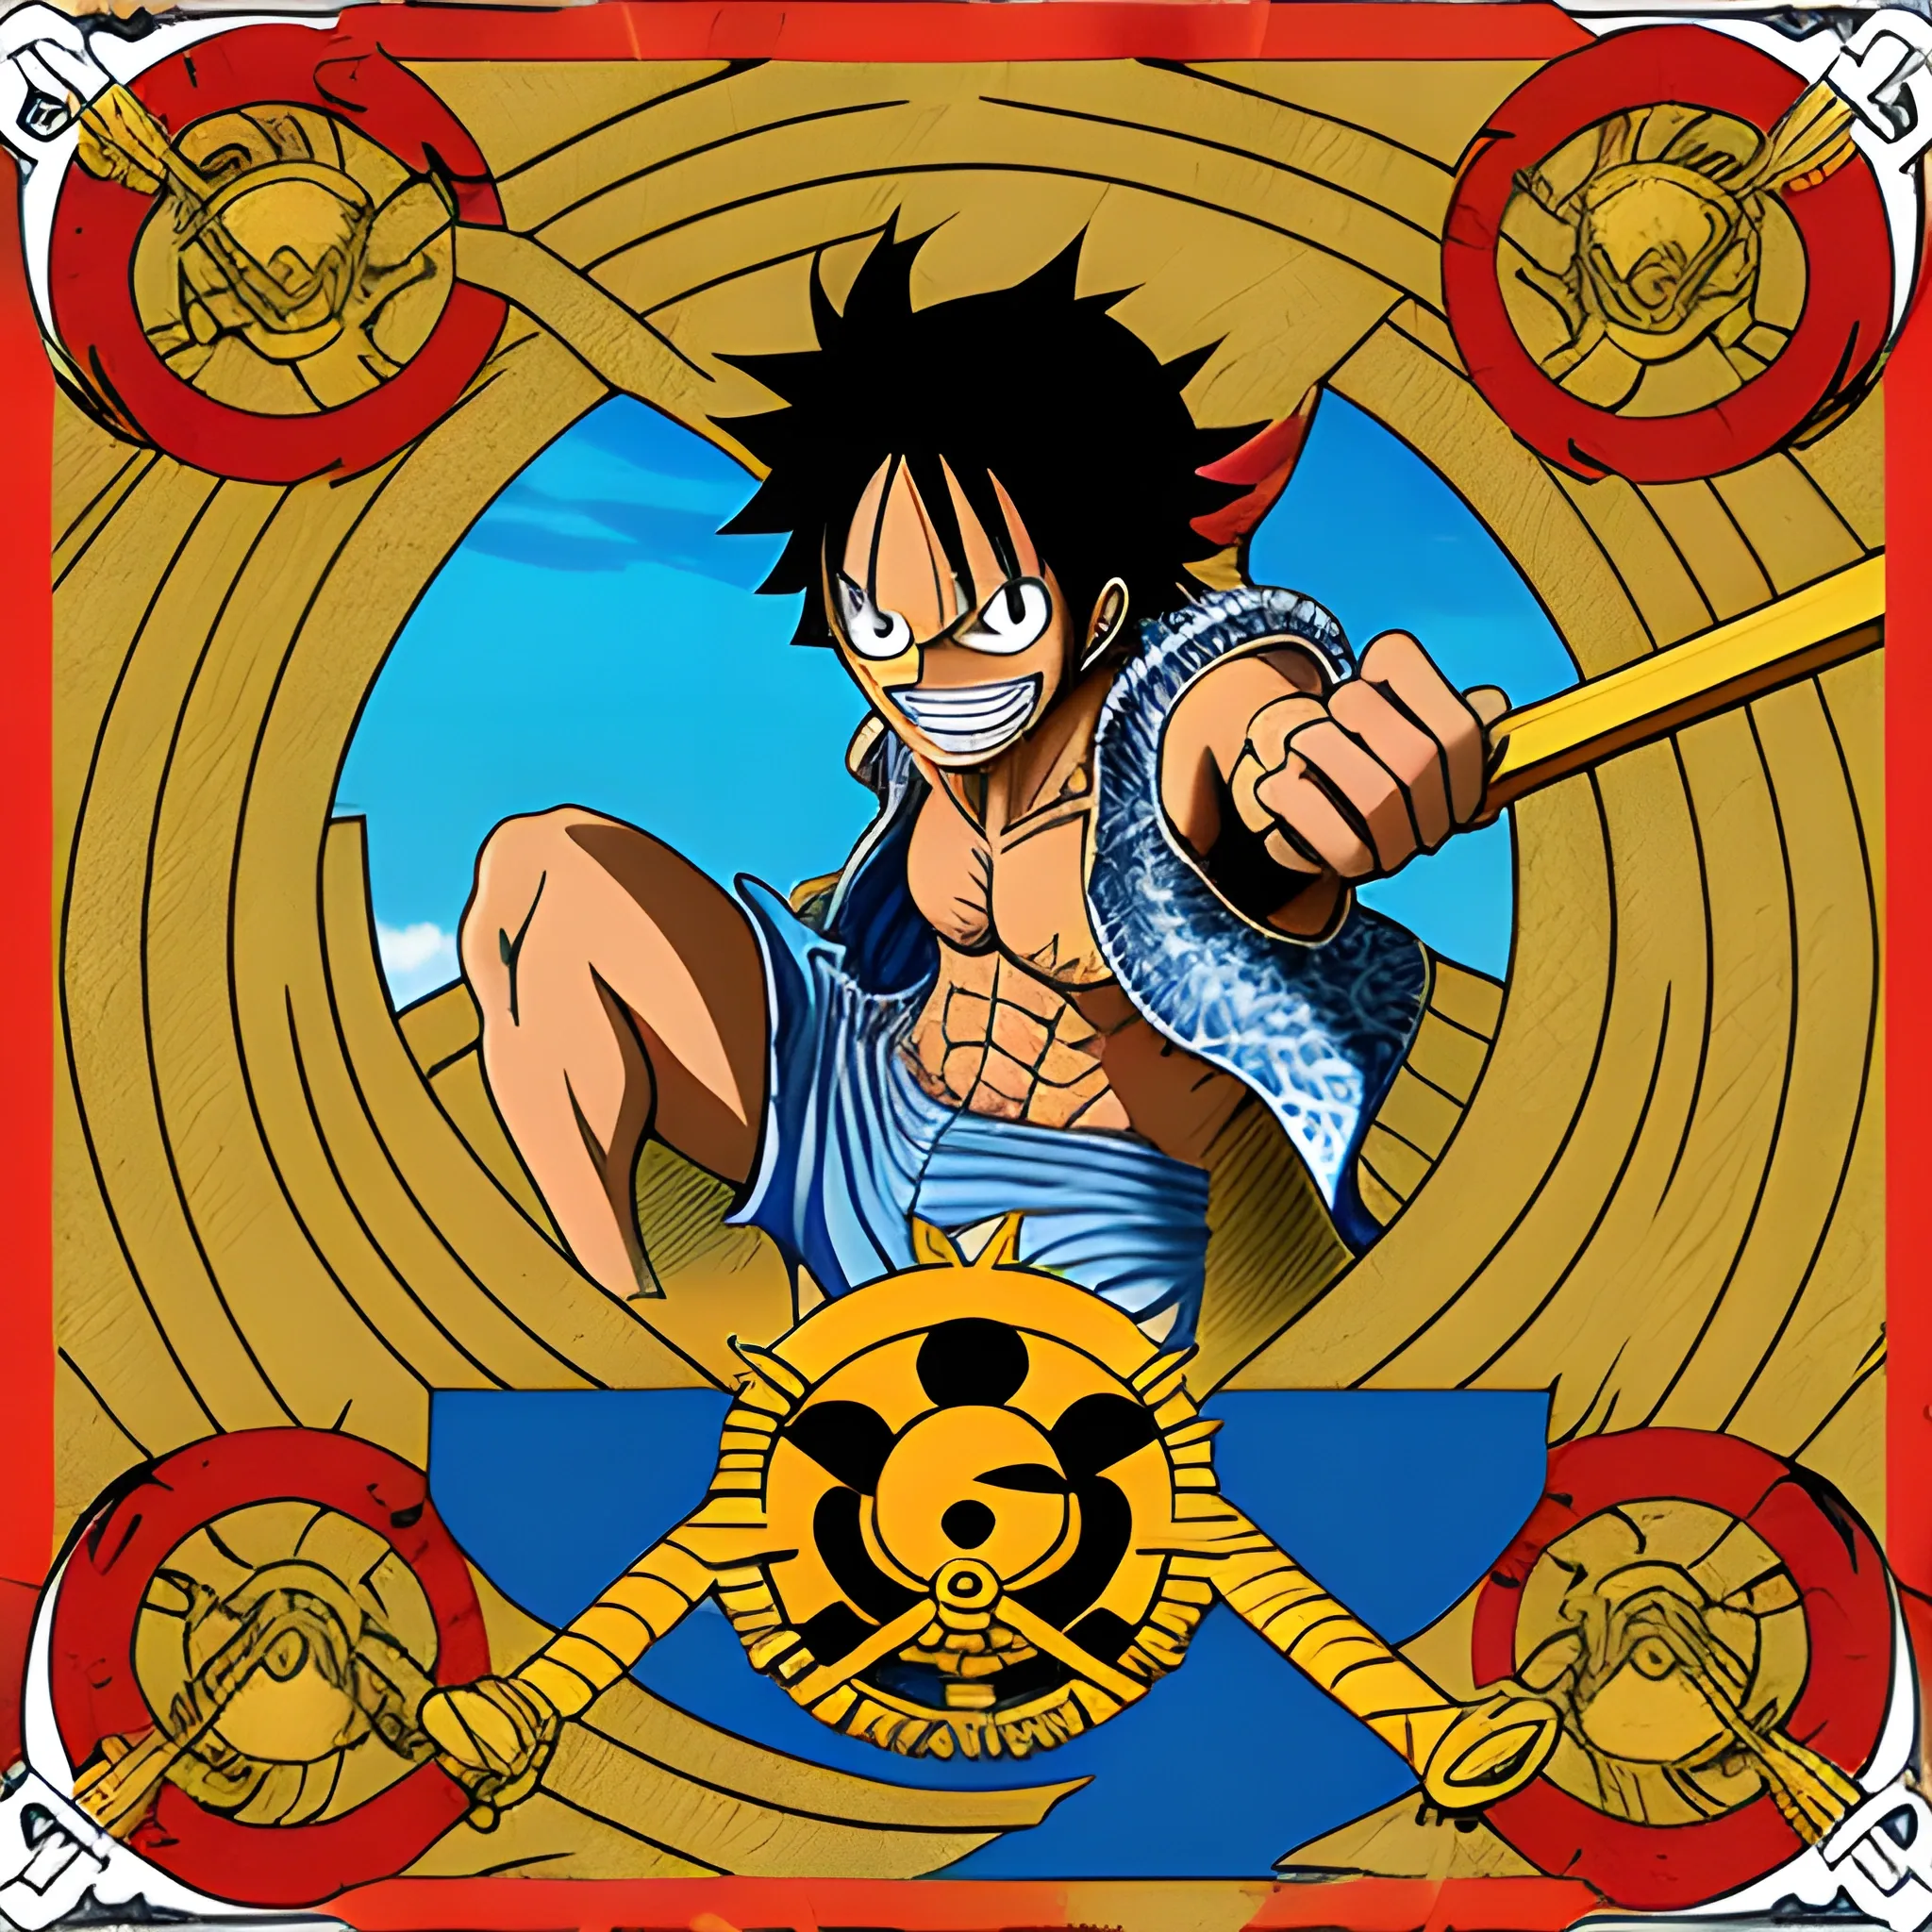 One Piece style Goku - DRAGONBALL Z SAGAS - HD by d0d0g0ne on